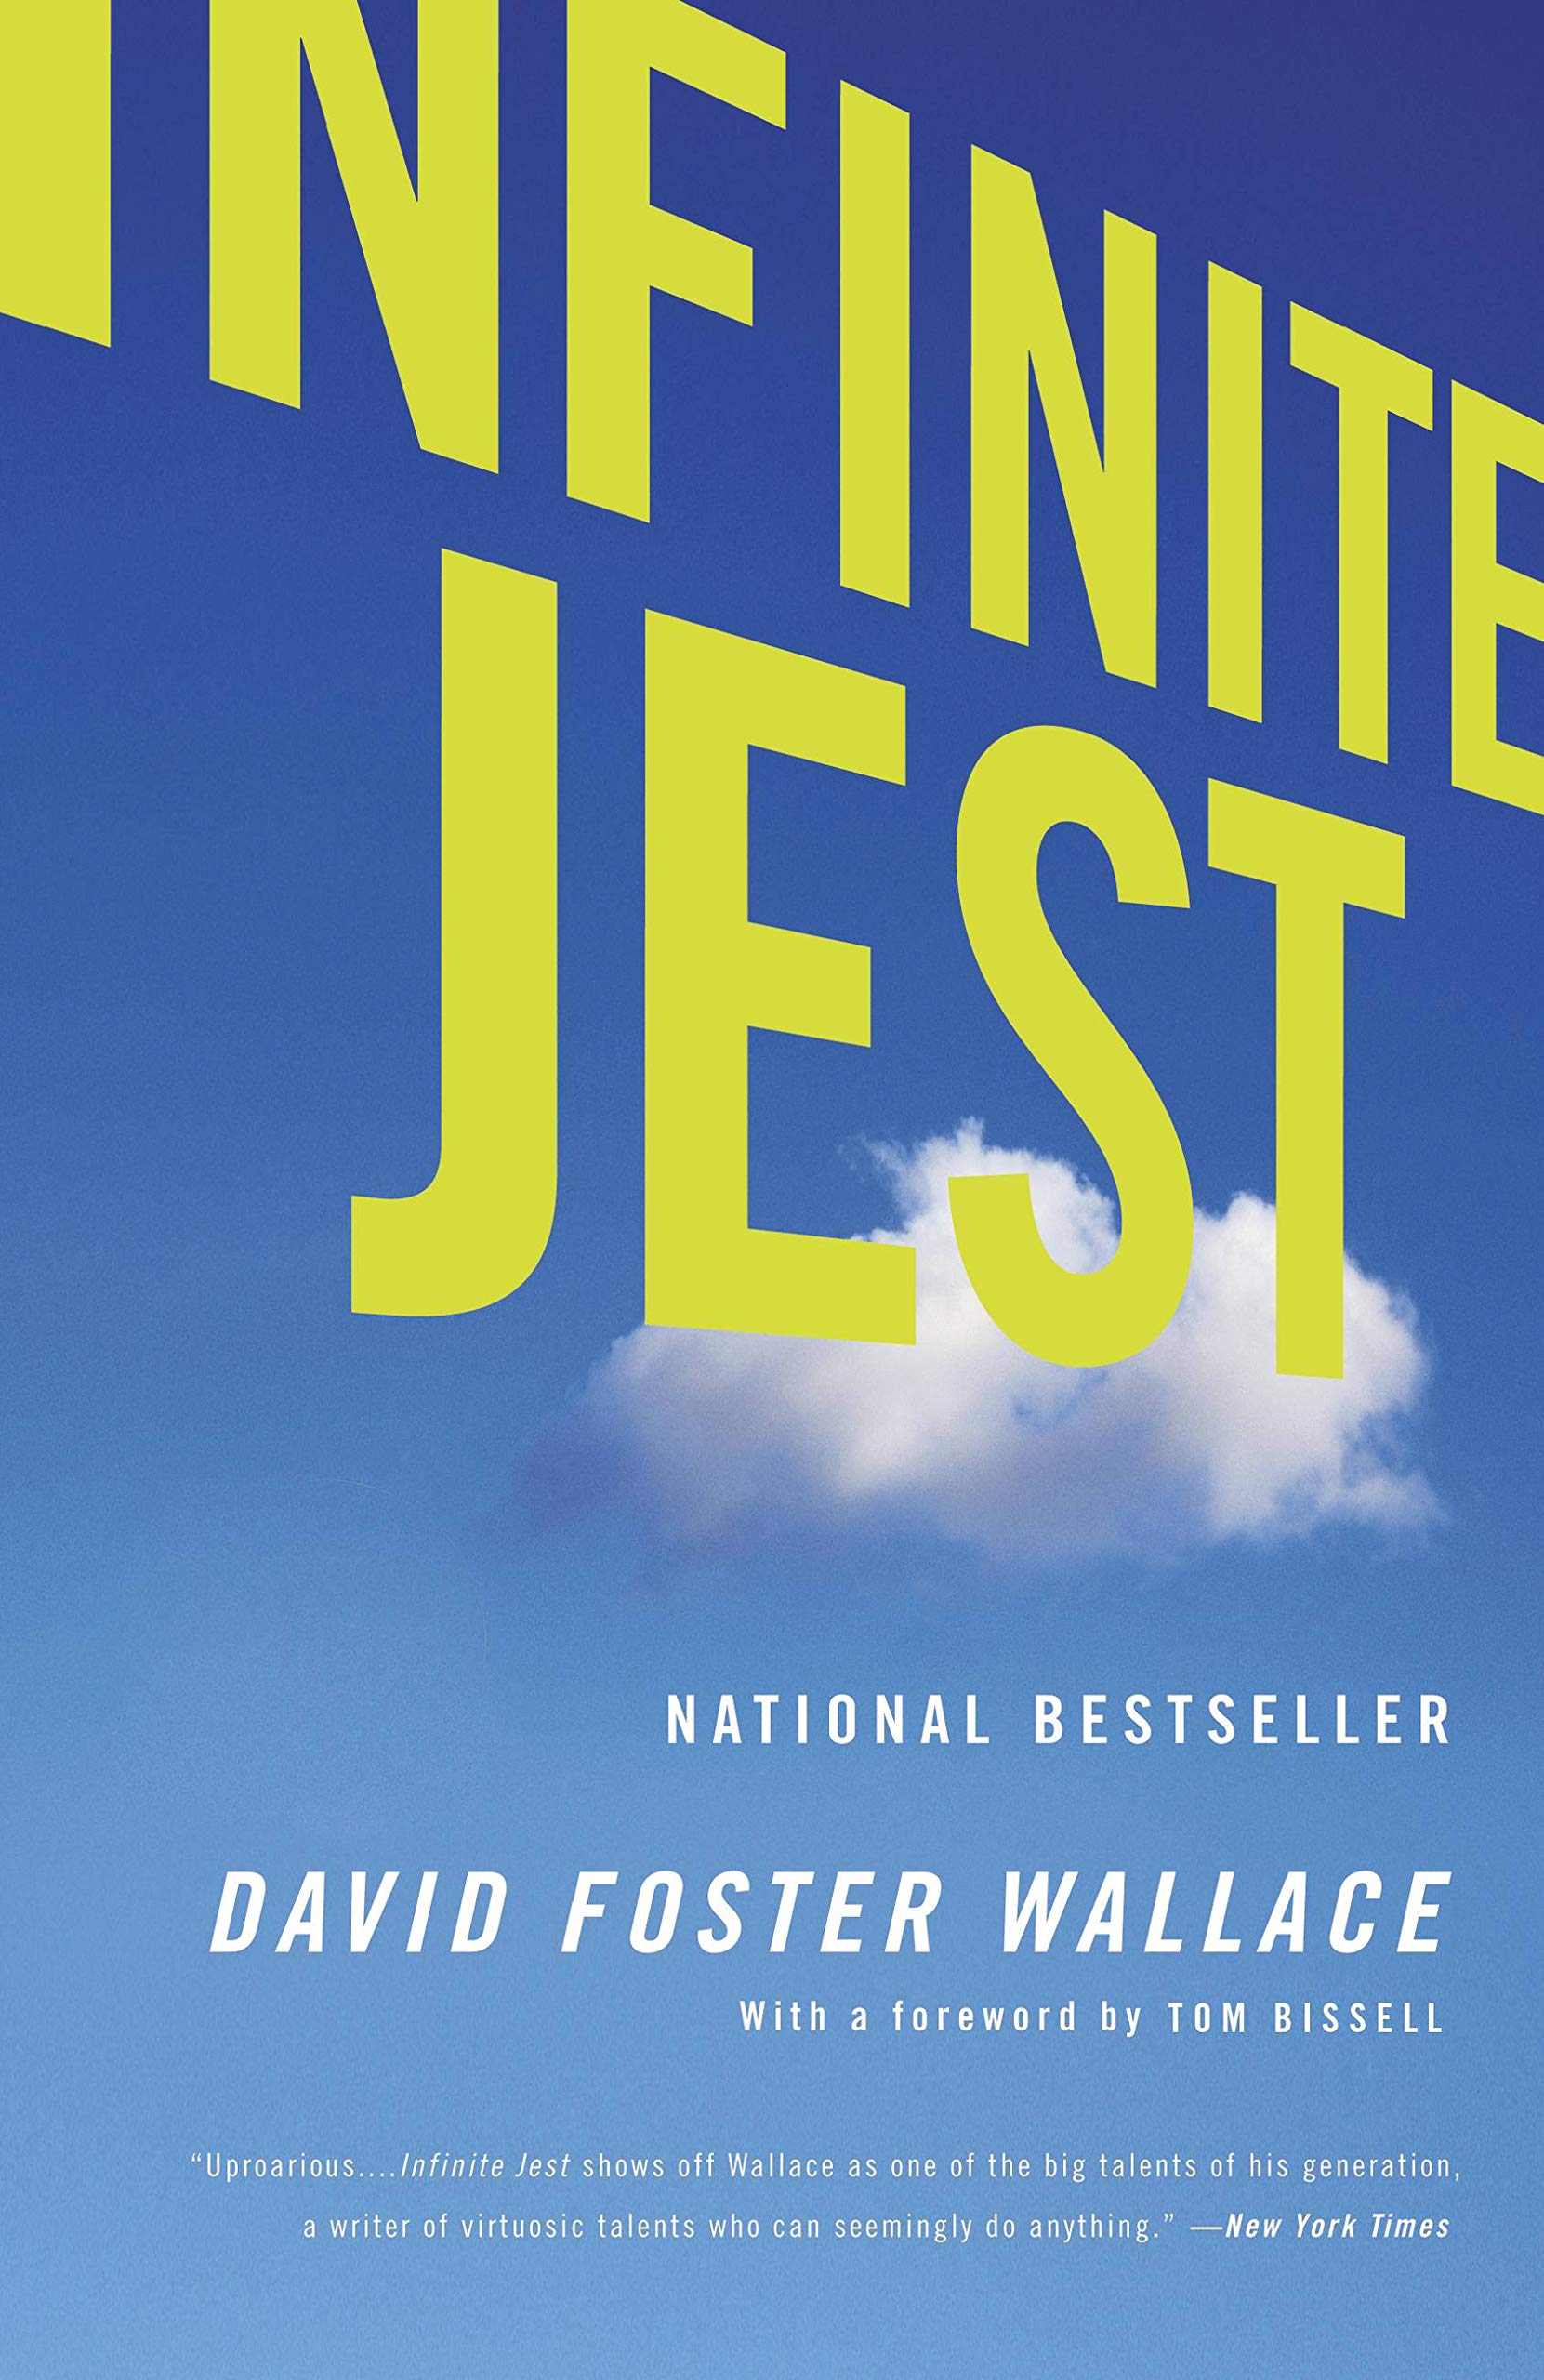 Infinite Jest (eBook) by David Foster Wallace $3.99